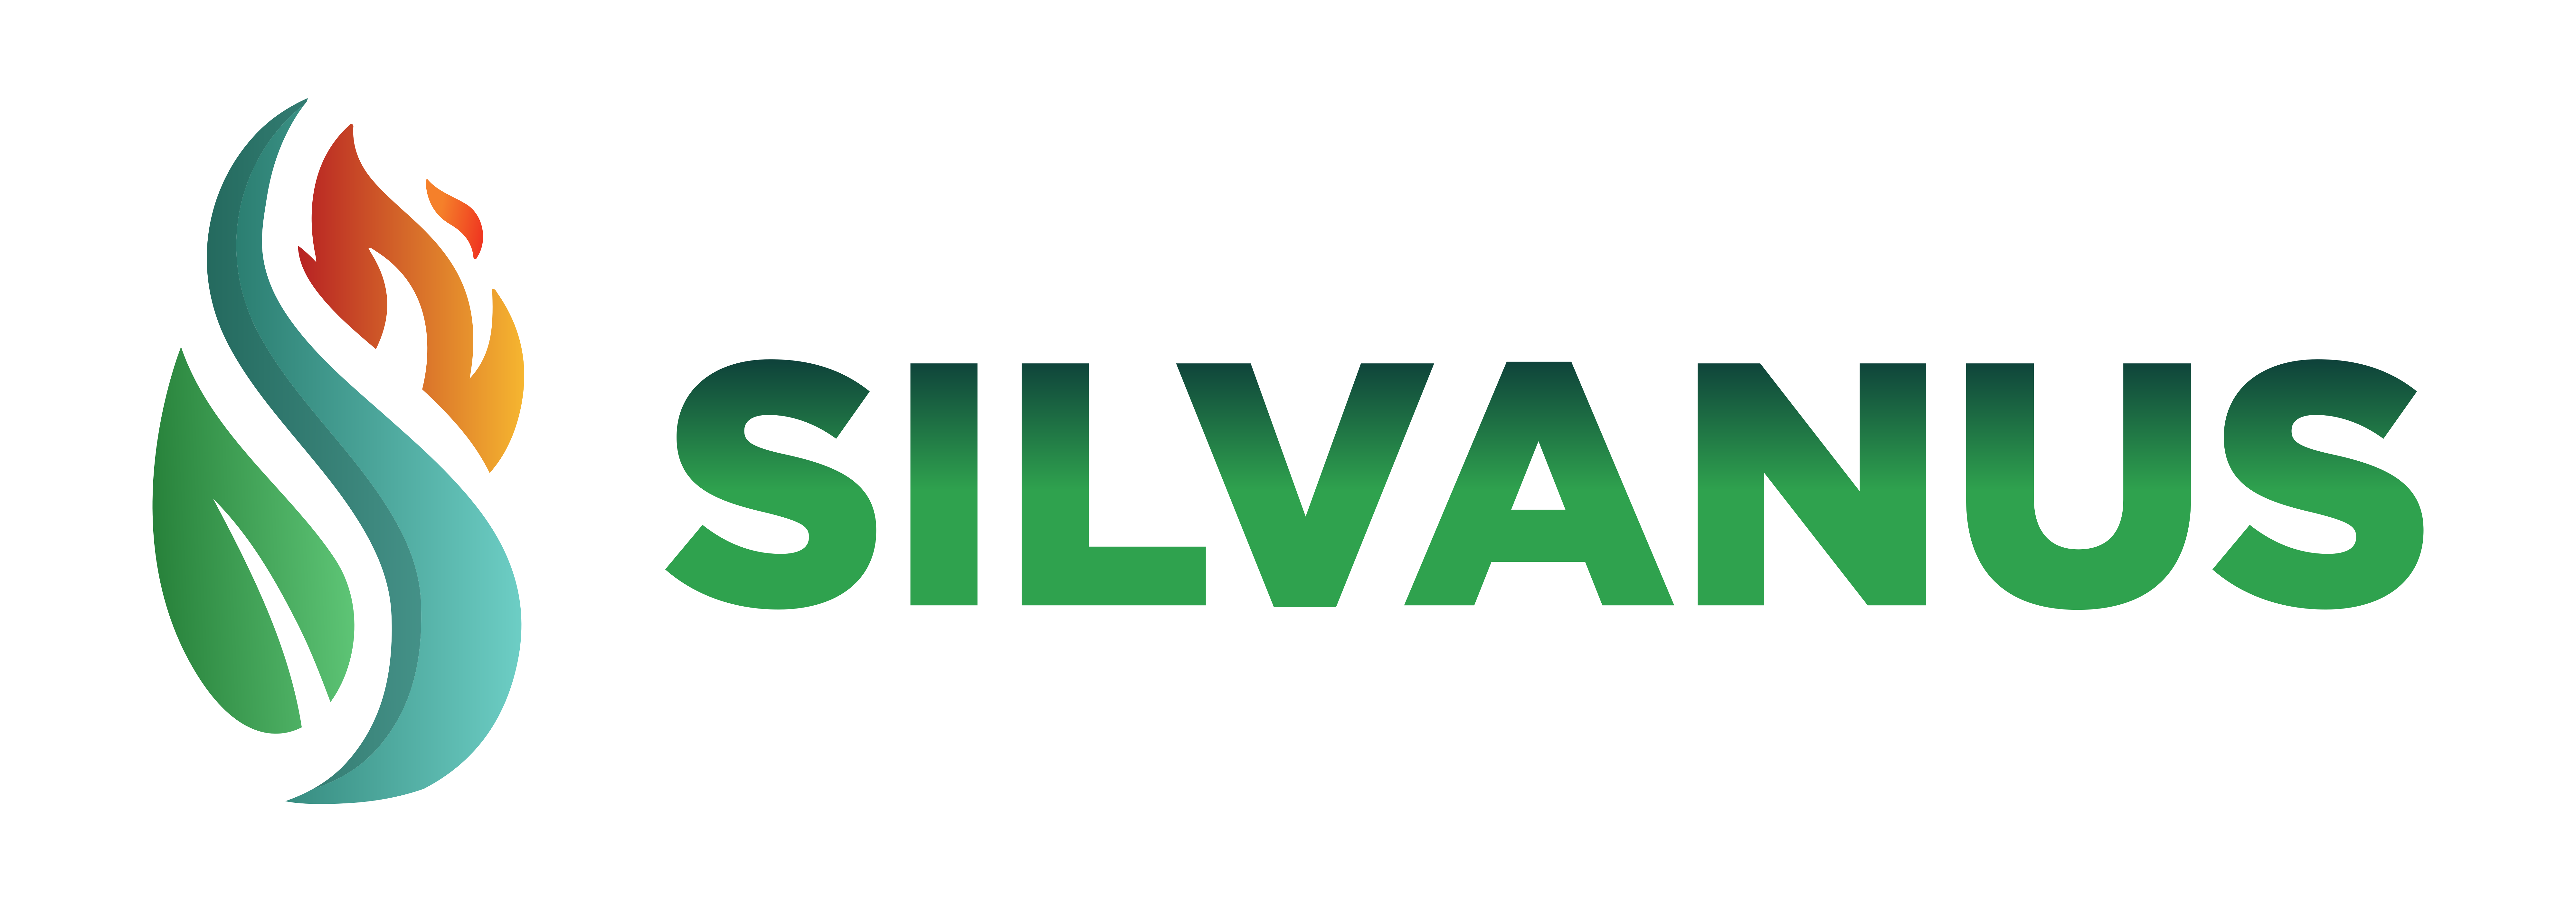 silvanus_logo